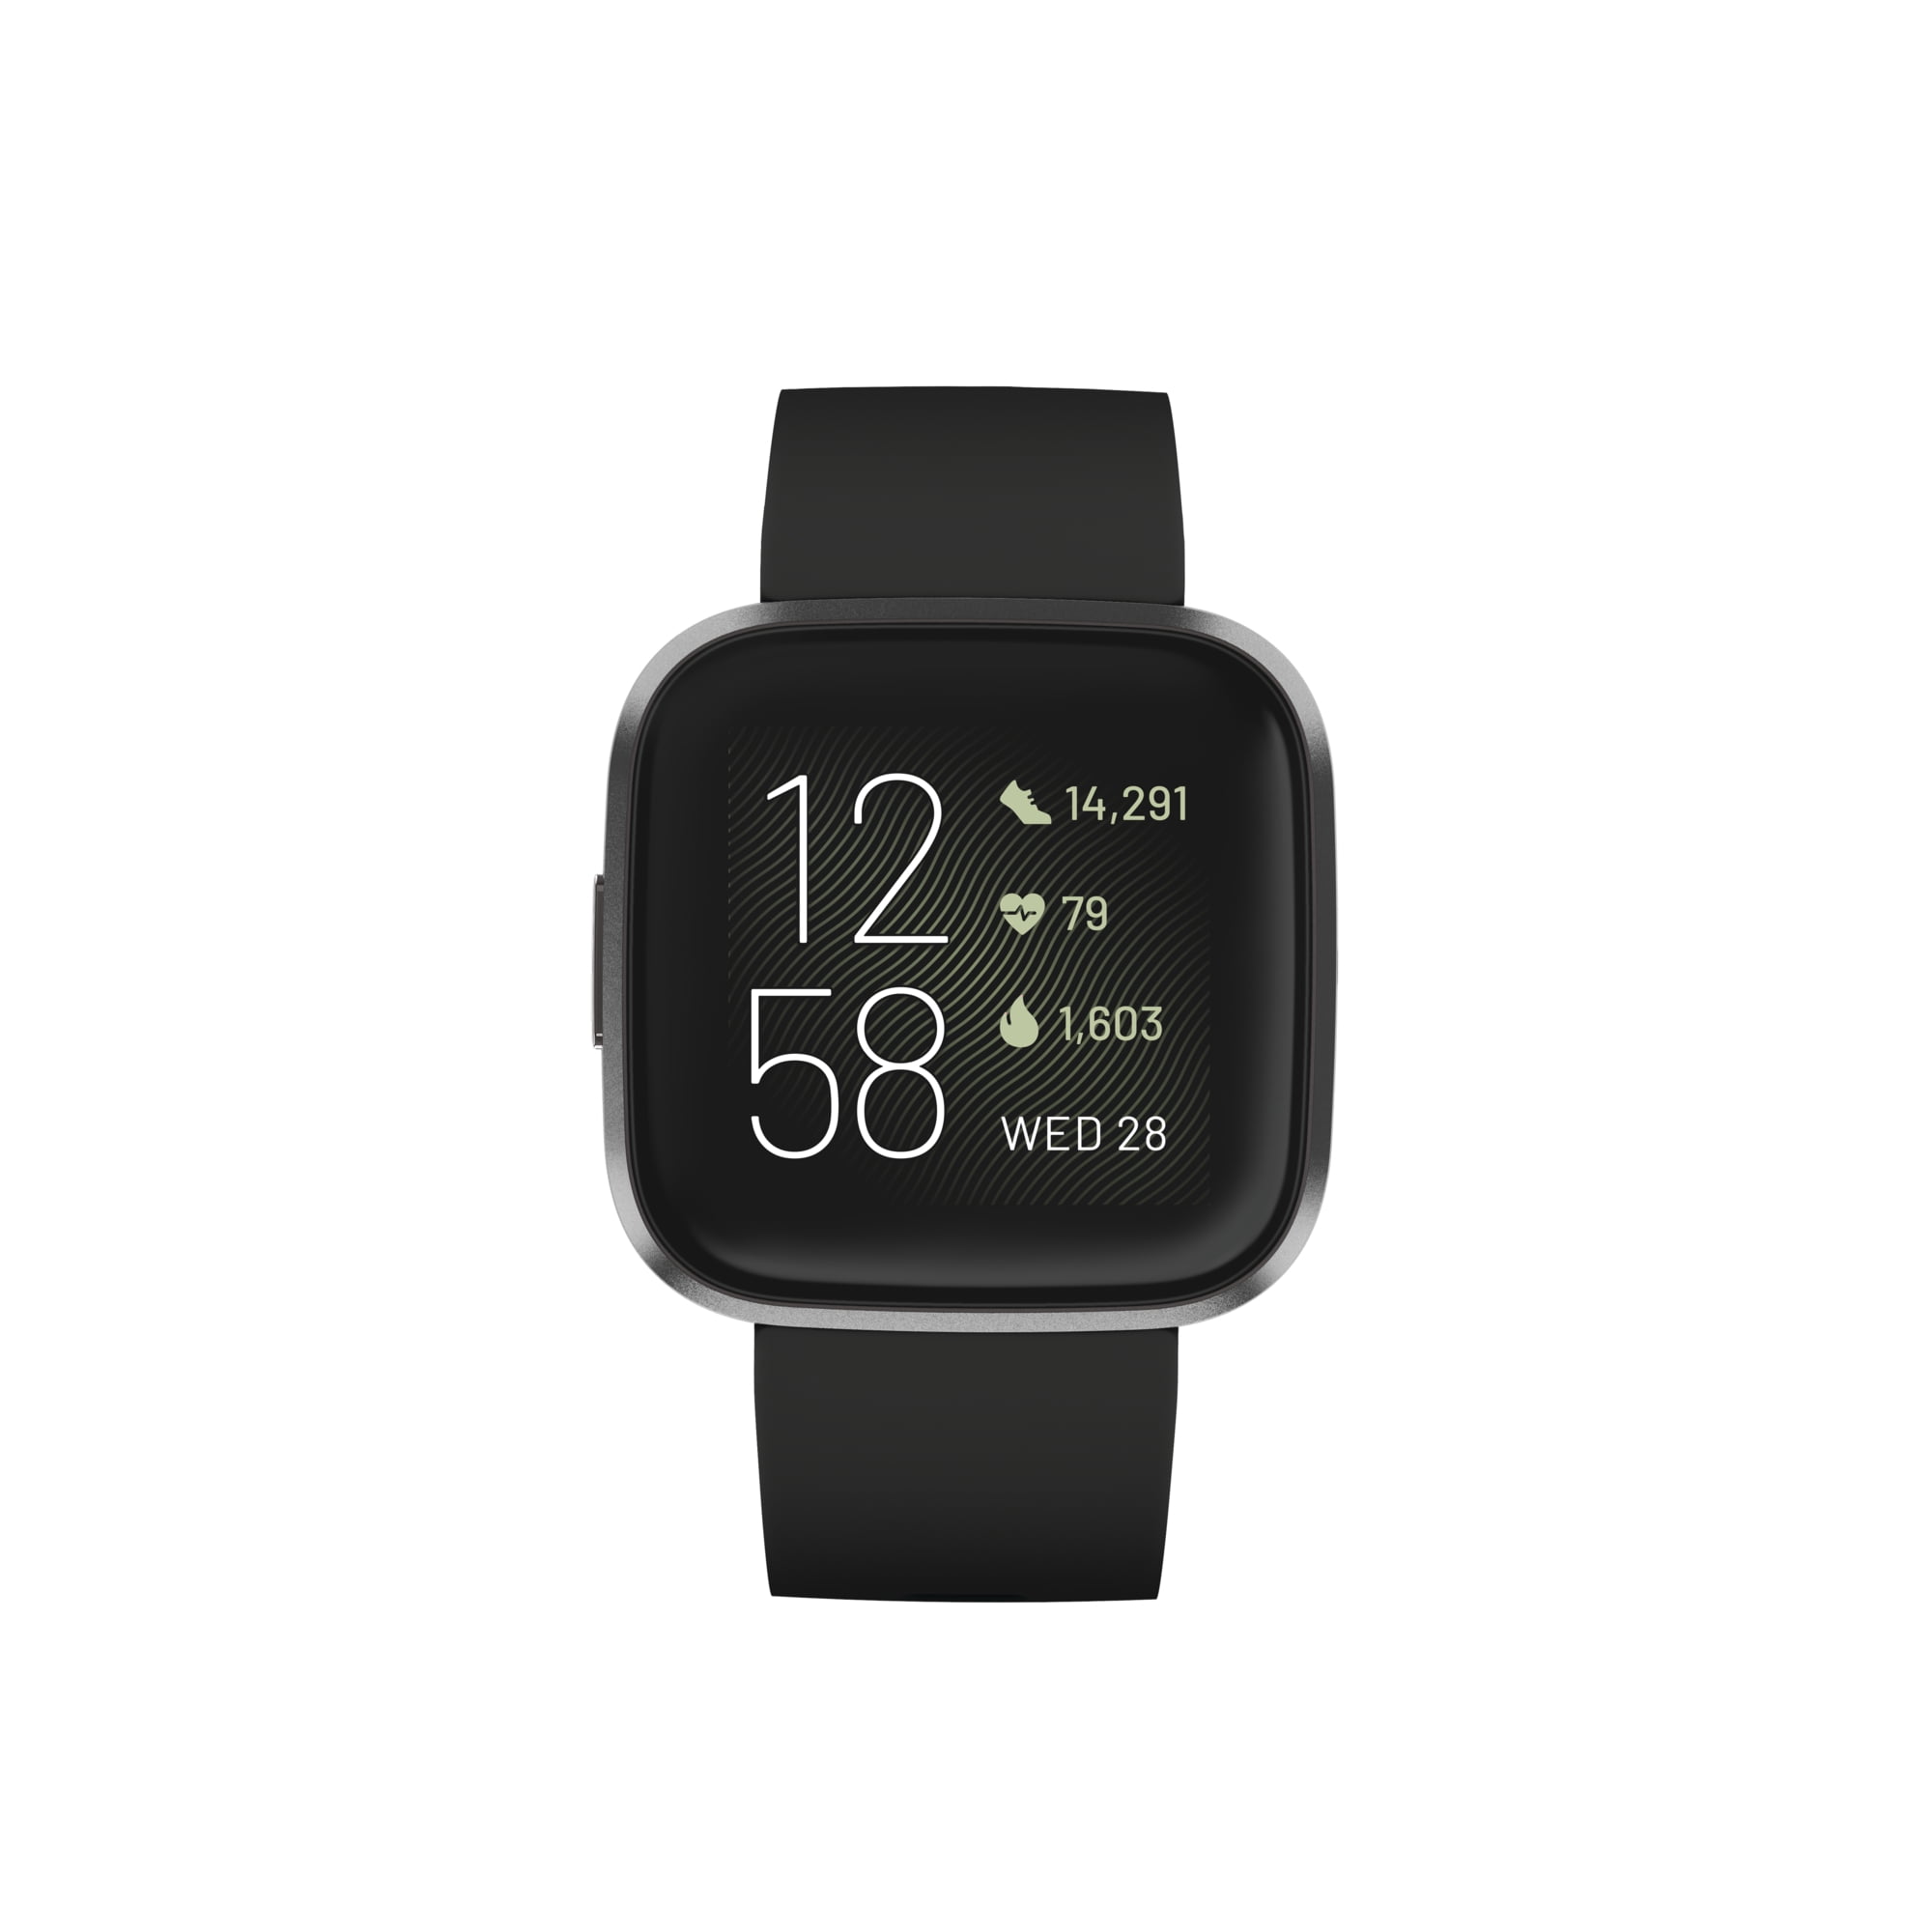 Fitbit Versa 2 Health & Fitness Smartwatch Black/Carbon - Walmart.com